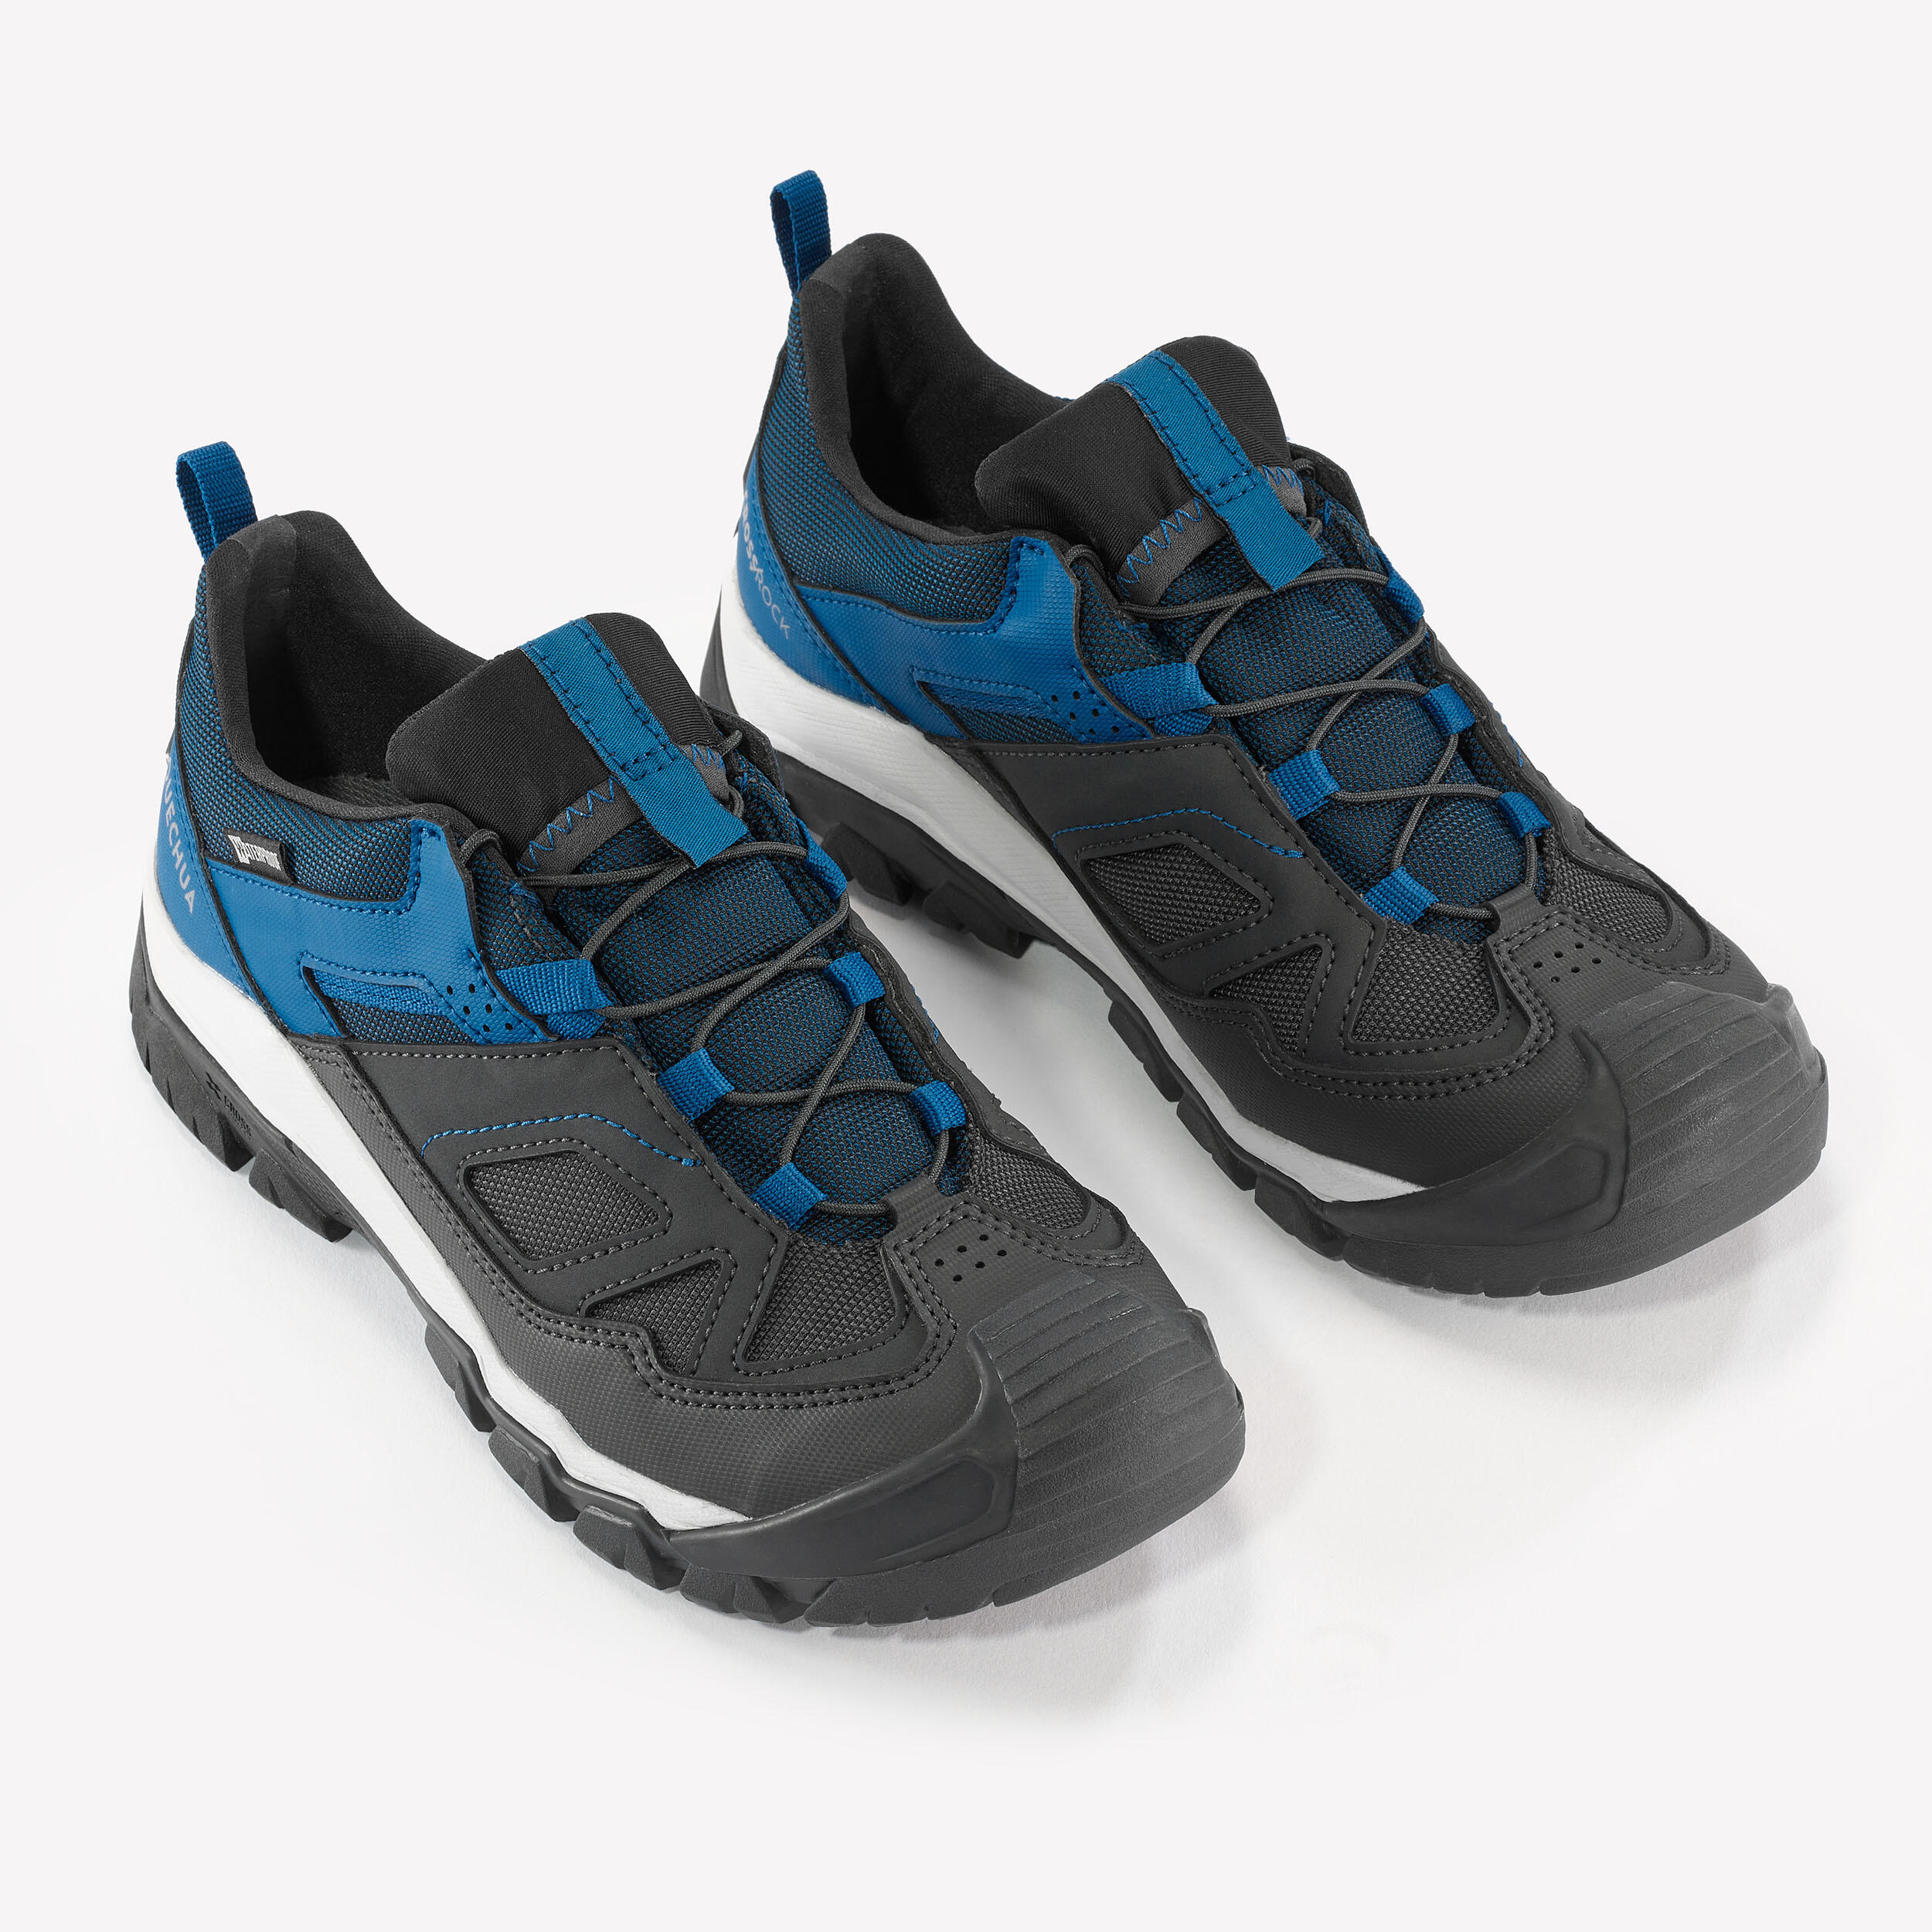 Kids’ Waterproof Lace-up Hiking Shoes - CROSSROCK UK size 2.5 - 5 - Blue 5/10